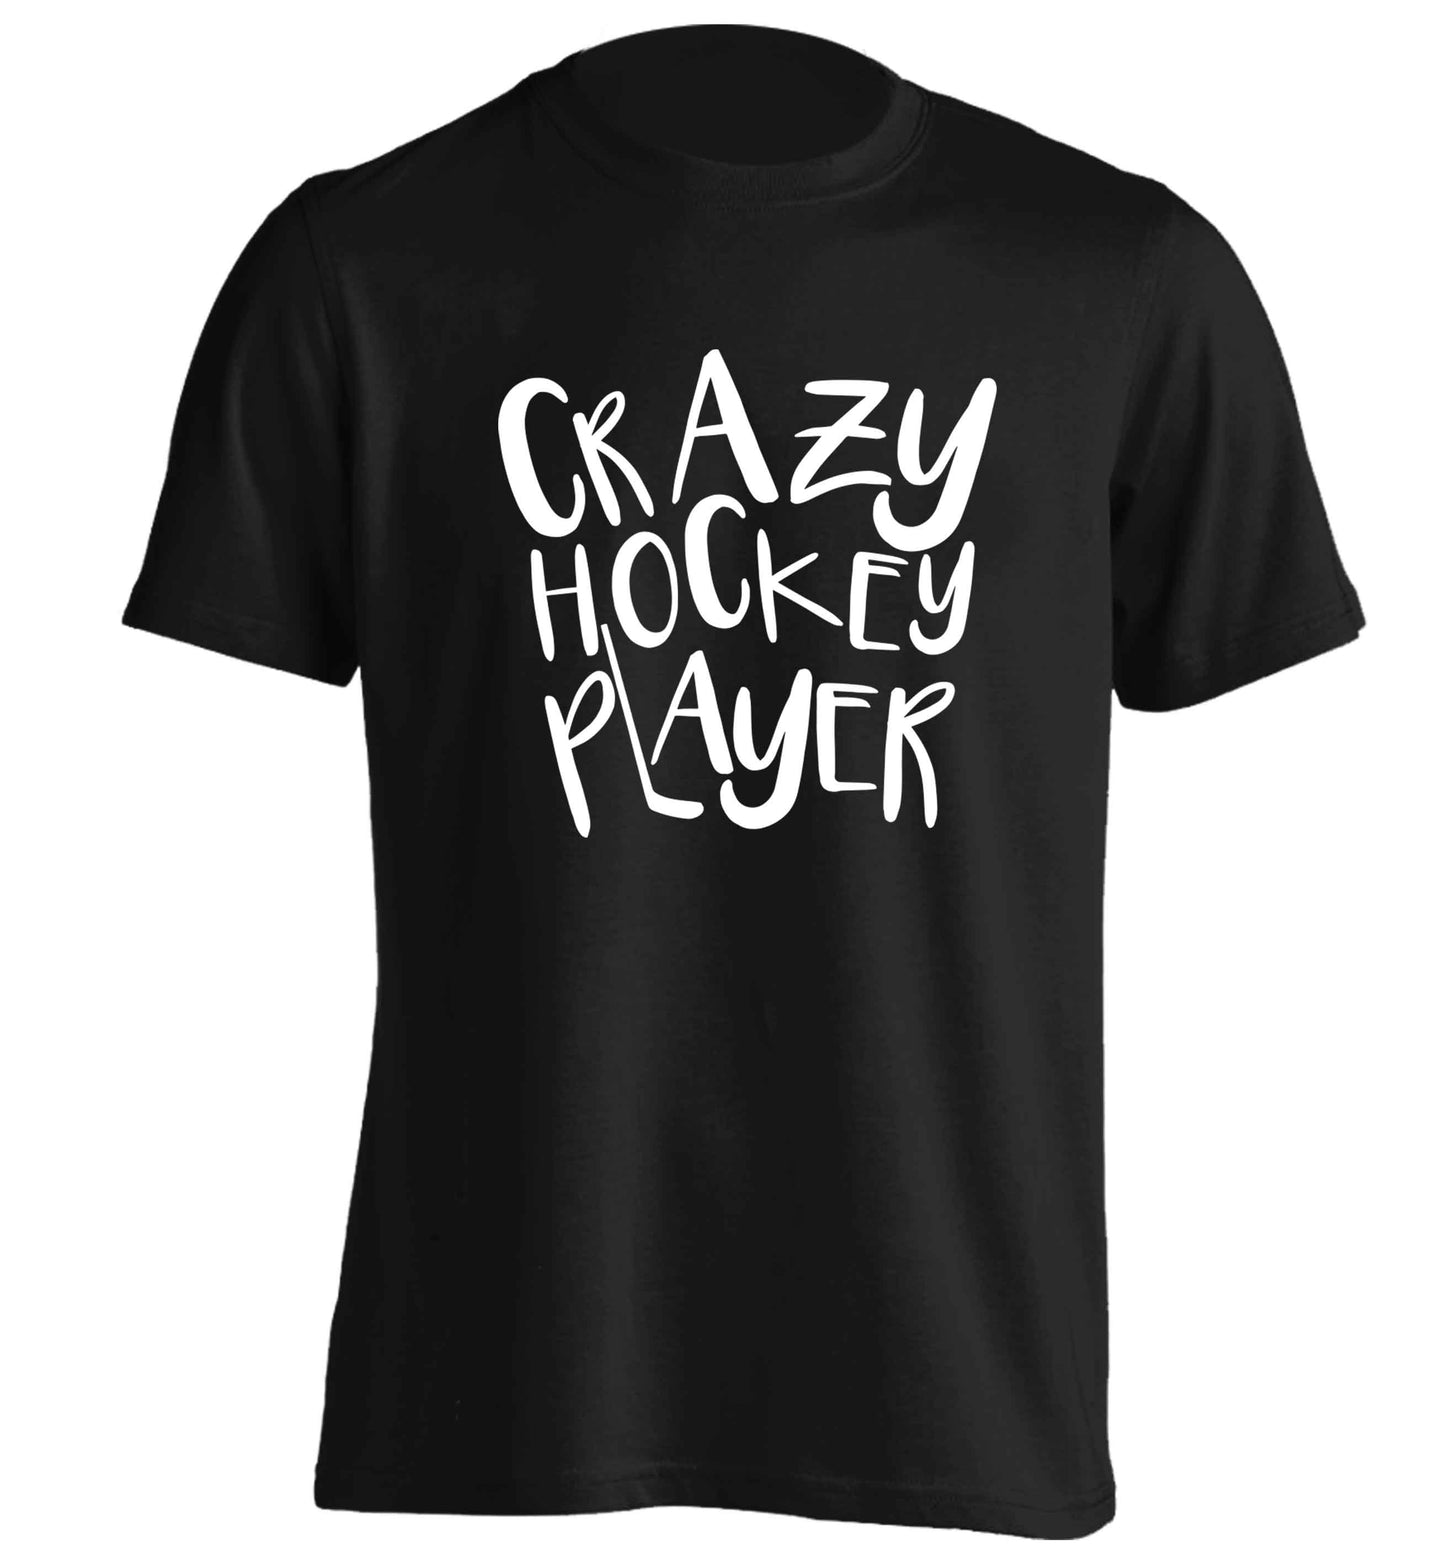 Crazy hockey player adults unisex black Tshirt 2XL